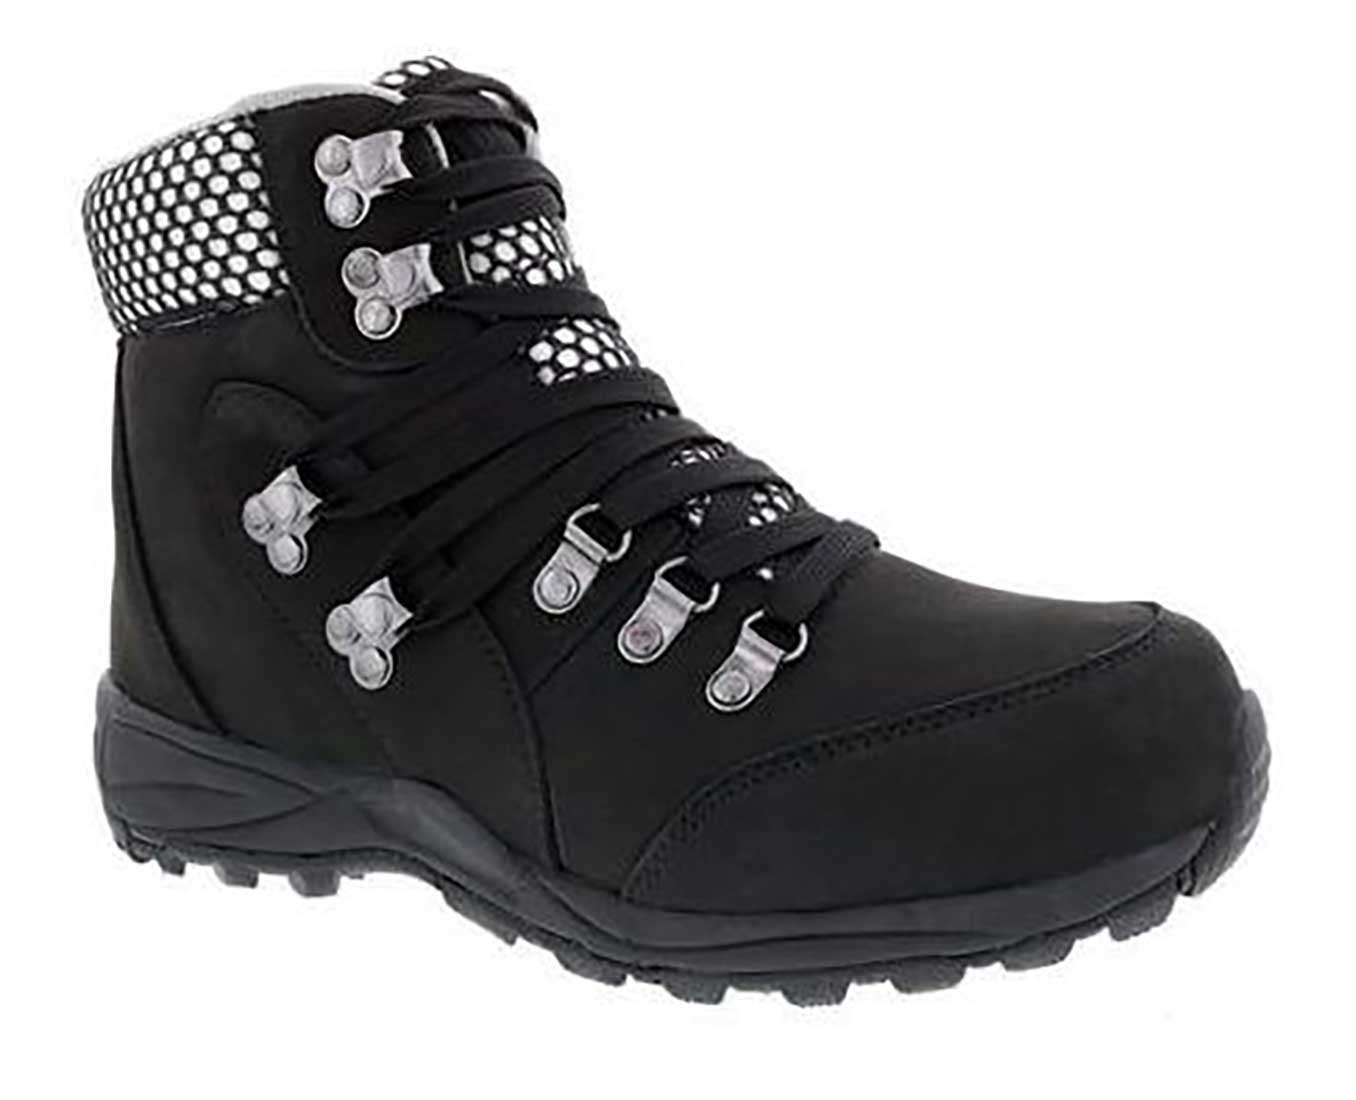 Drew Shoes Iceberg 10189 - Women's 4 Comfort Therapeutic Diabetic Hiking Boot - Extra Depth For Orthotics